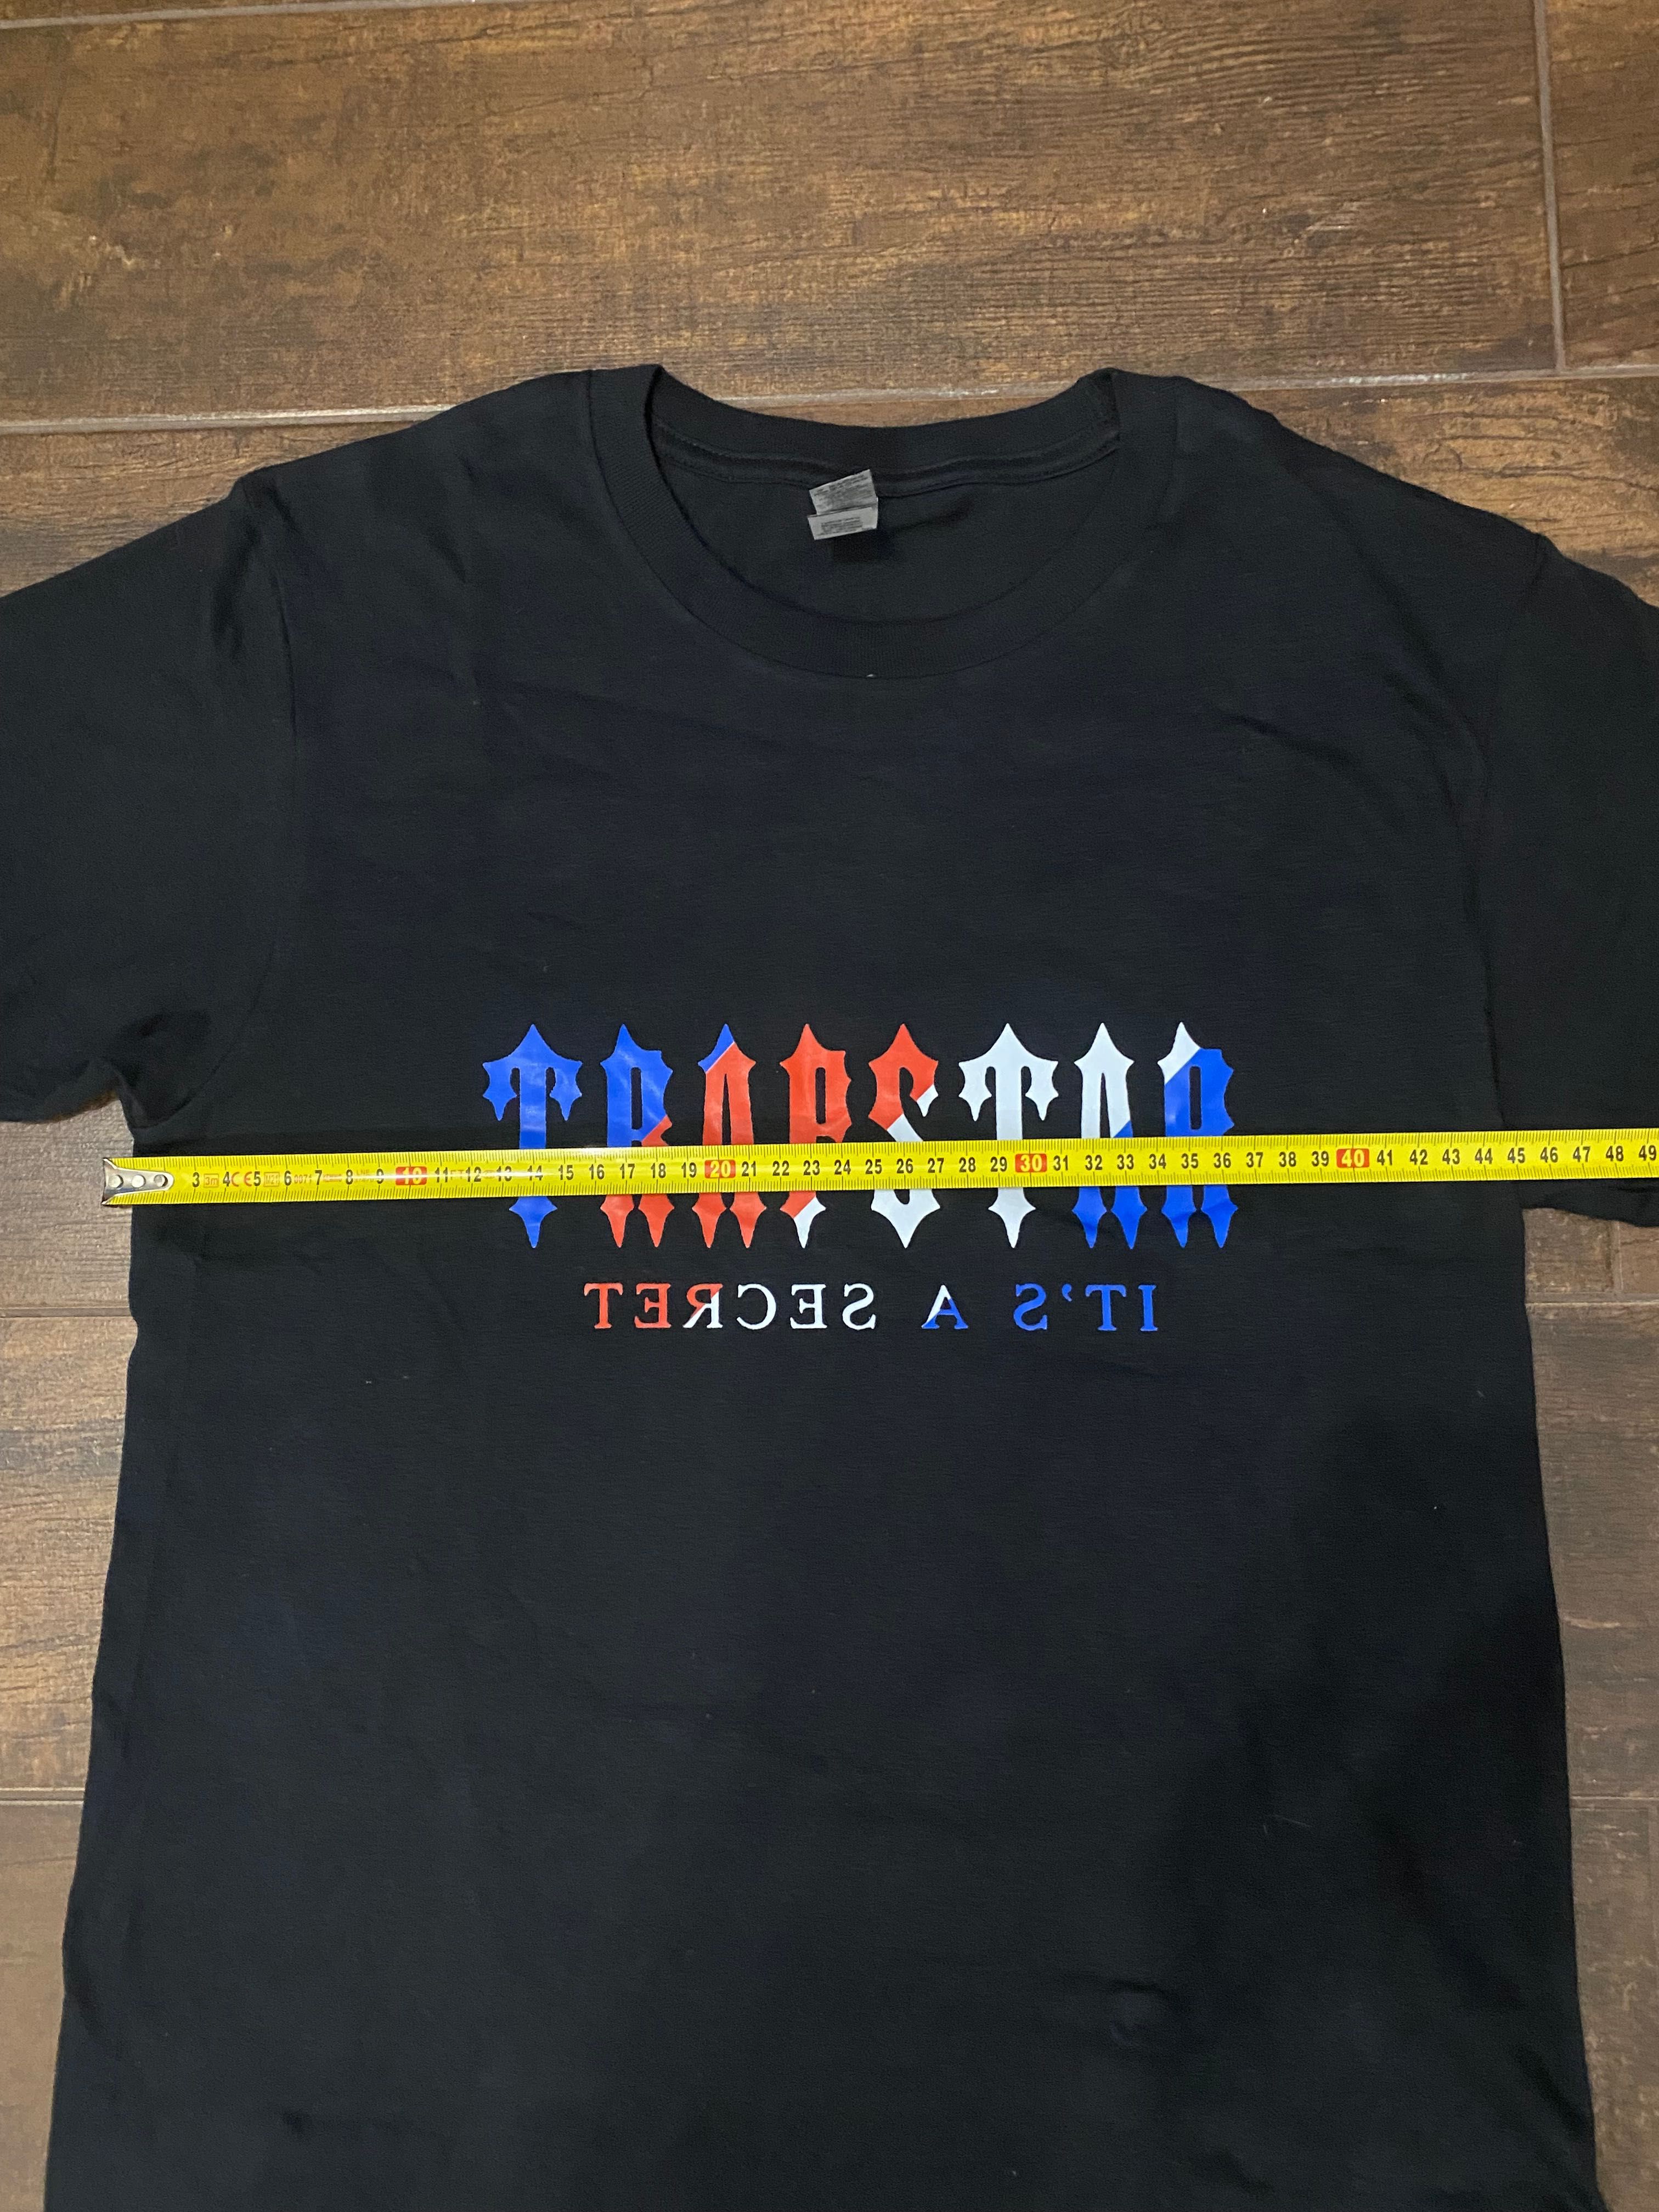 Trapstar Komplet T-shirt i Spodenki Rozmiar S